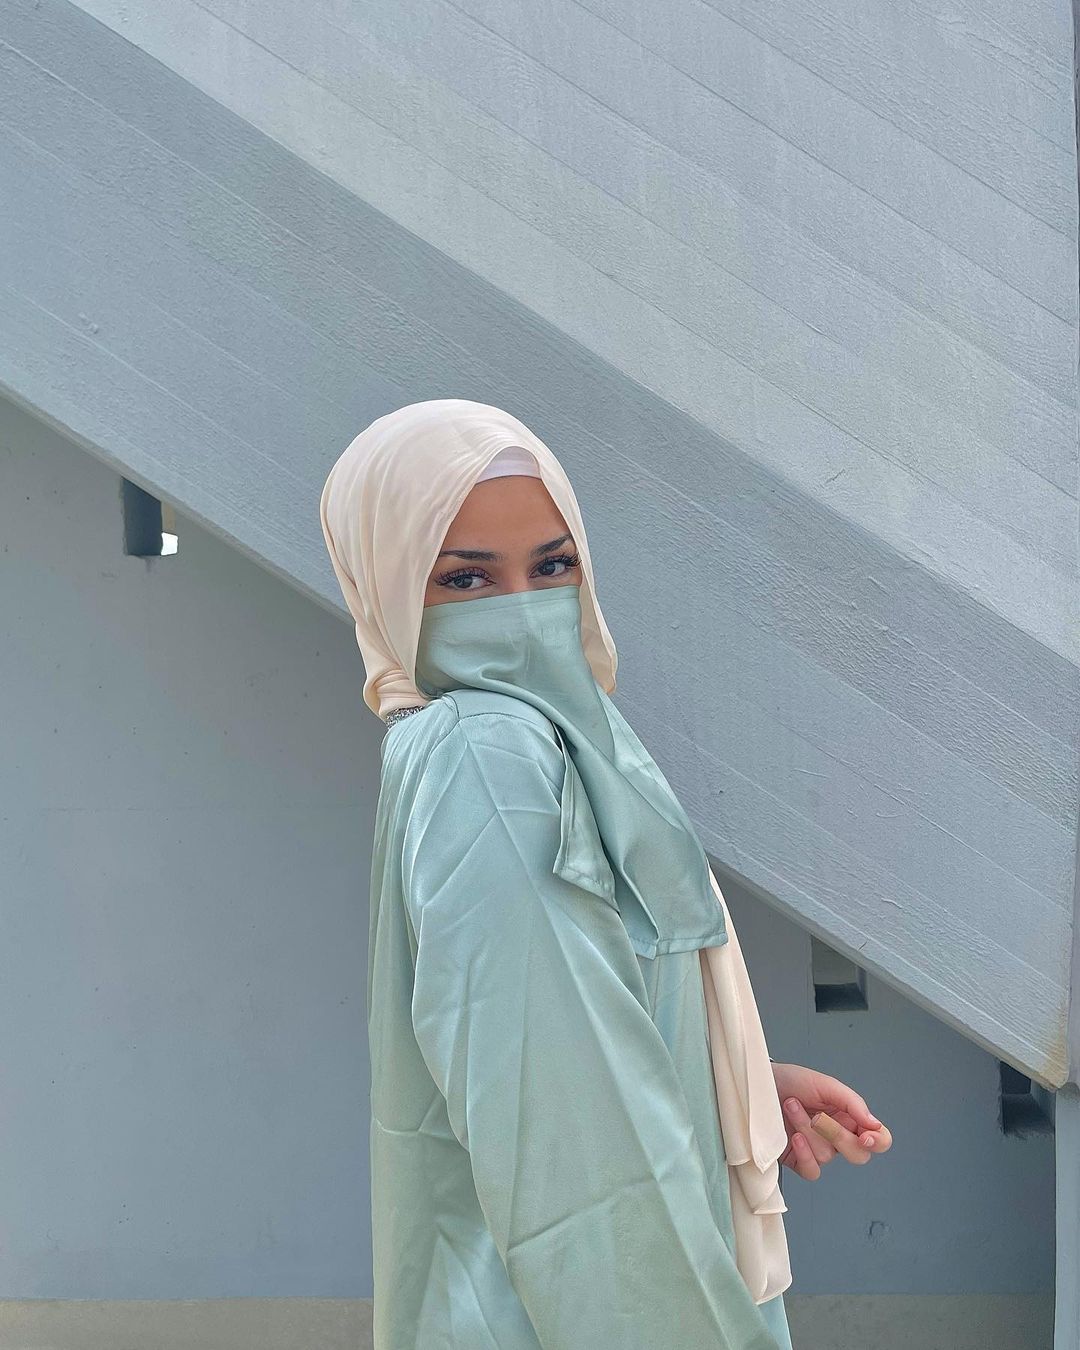 Stylish Hijab Girls Pic for Profile